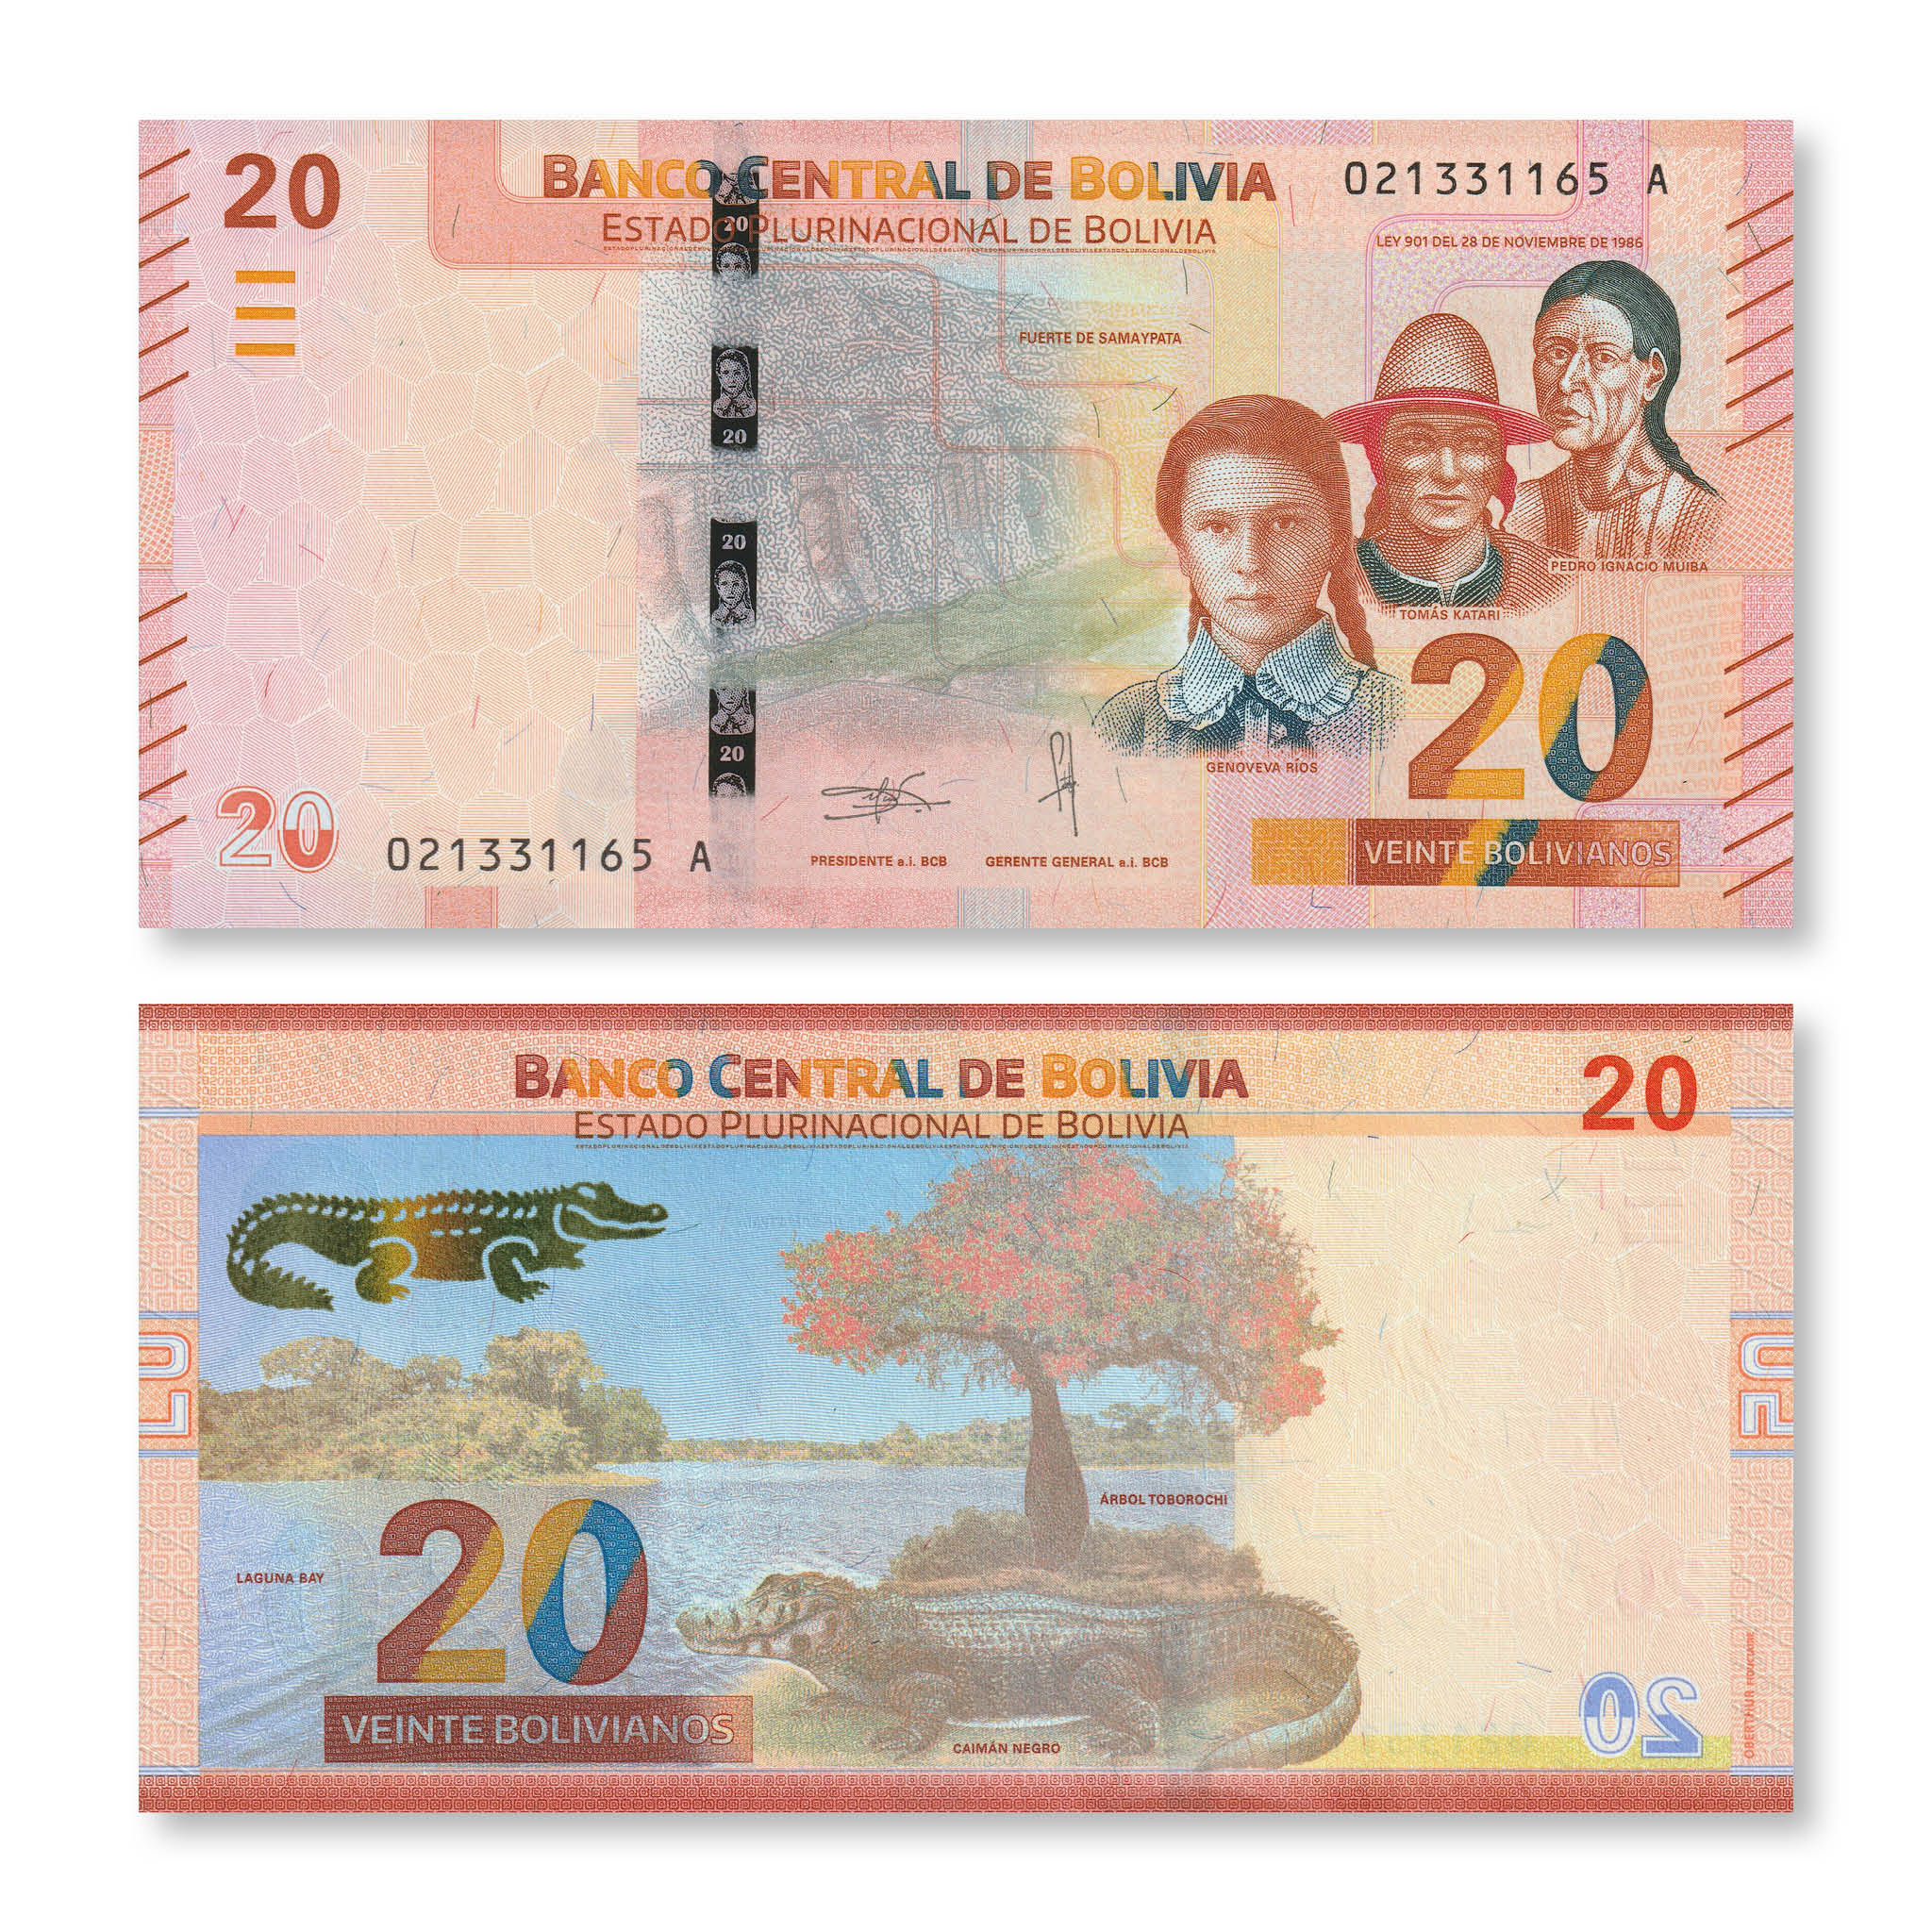 Bolivia 20 Bolivianos, 2018, B418a, P249, UNC - Robert's World Money - World Banknotes